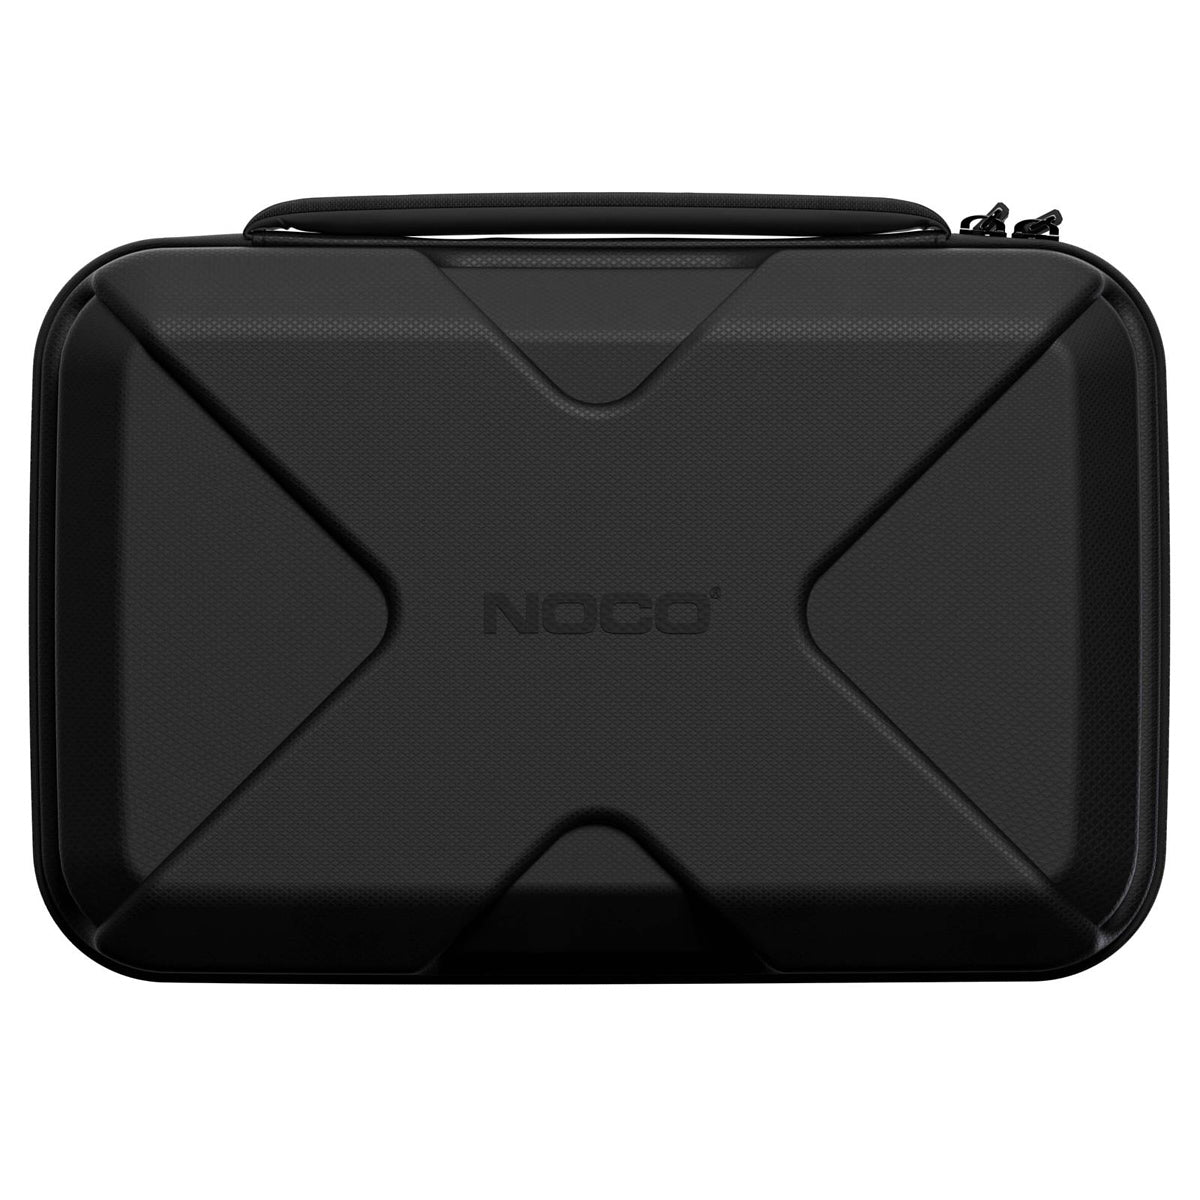 NOCO Case Protection GBX75 NOCGBC103